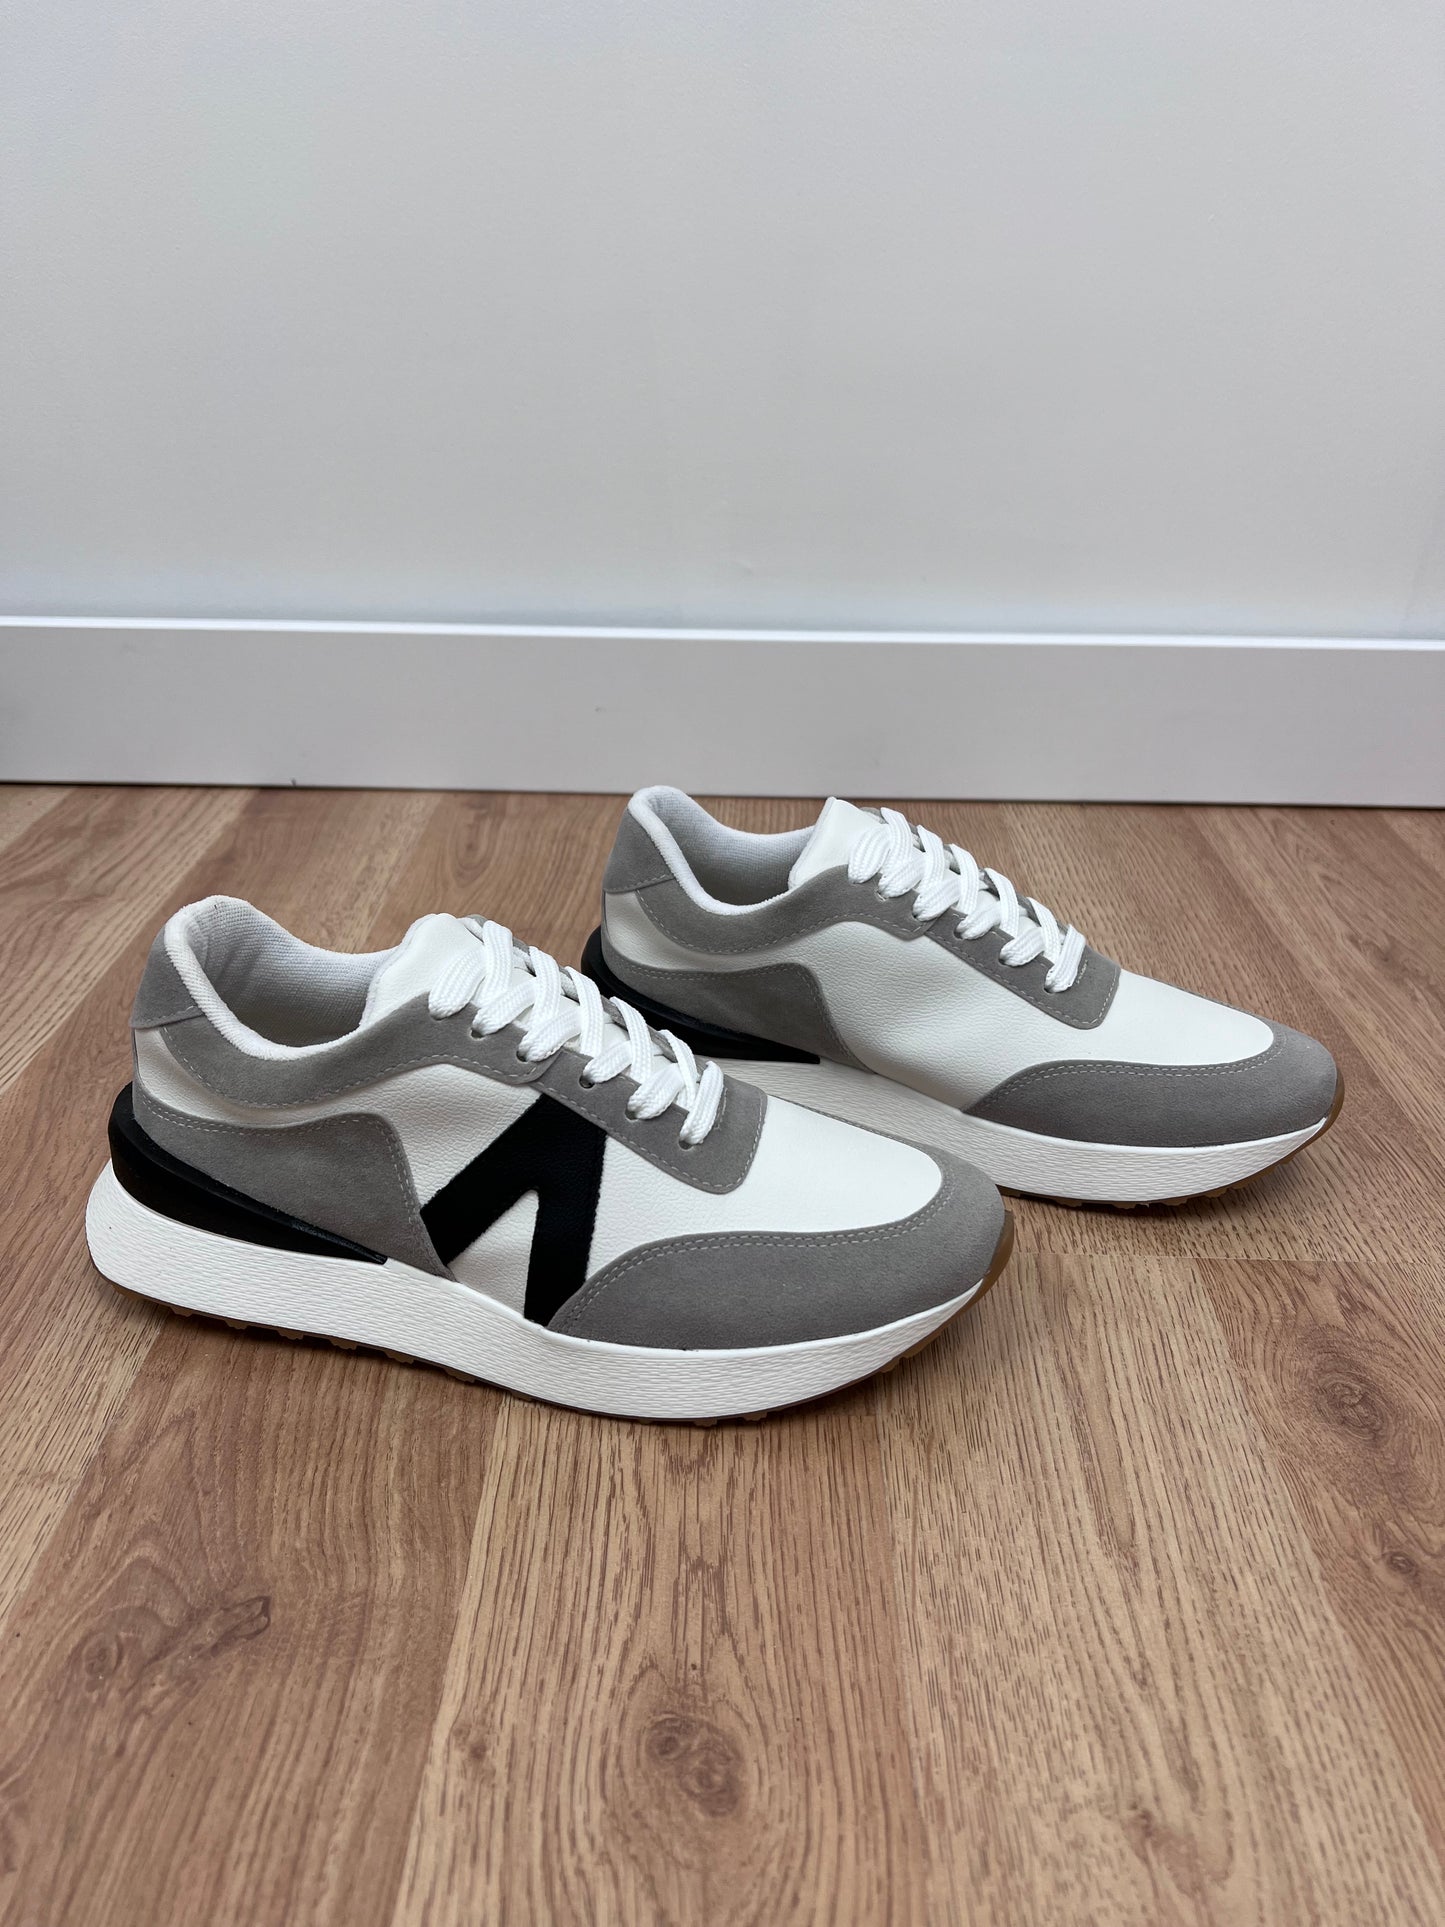 The Nova Sneaker